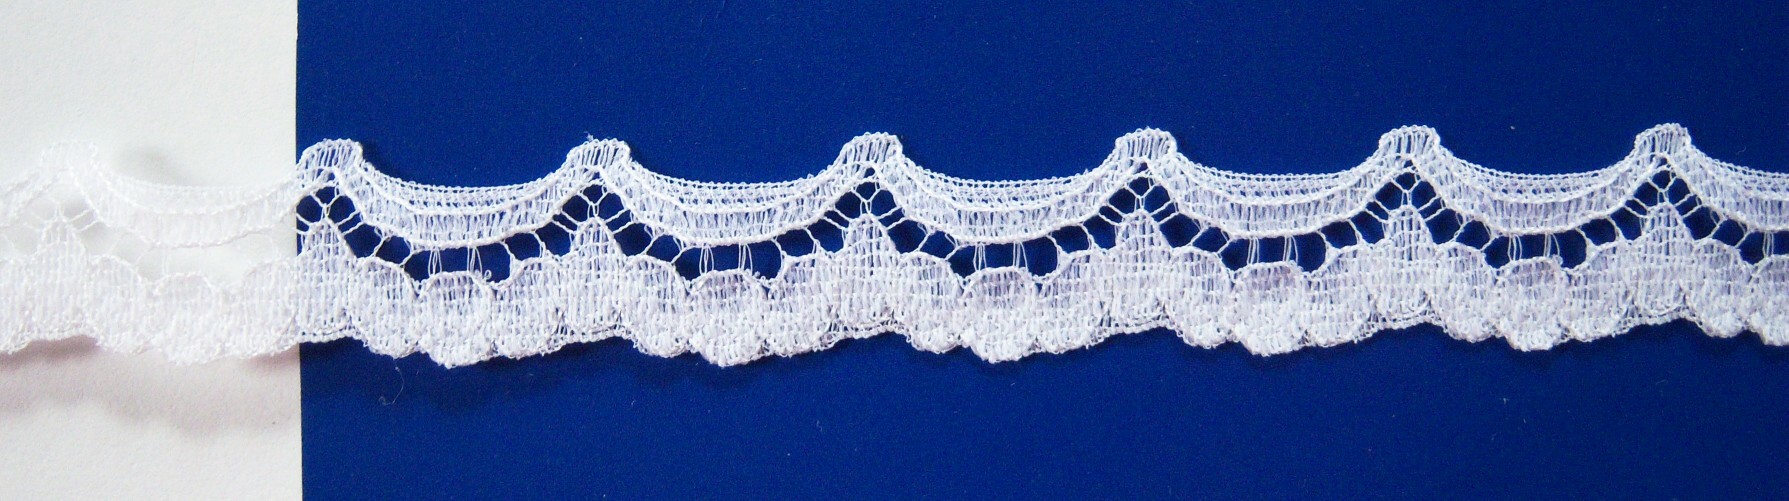 White 3/4" Nylon Lace